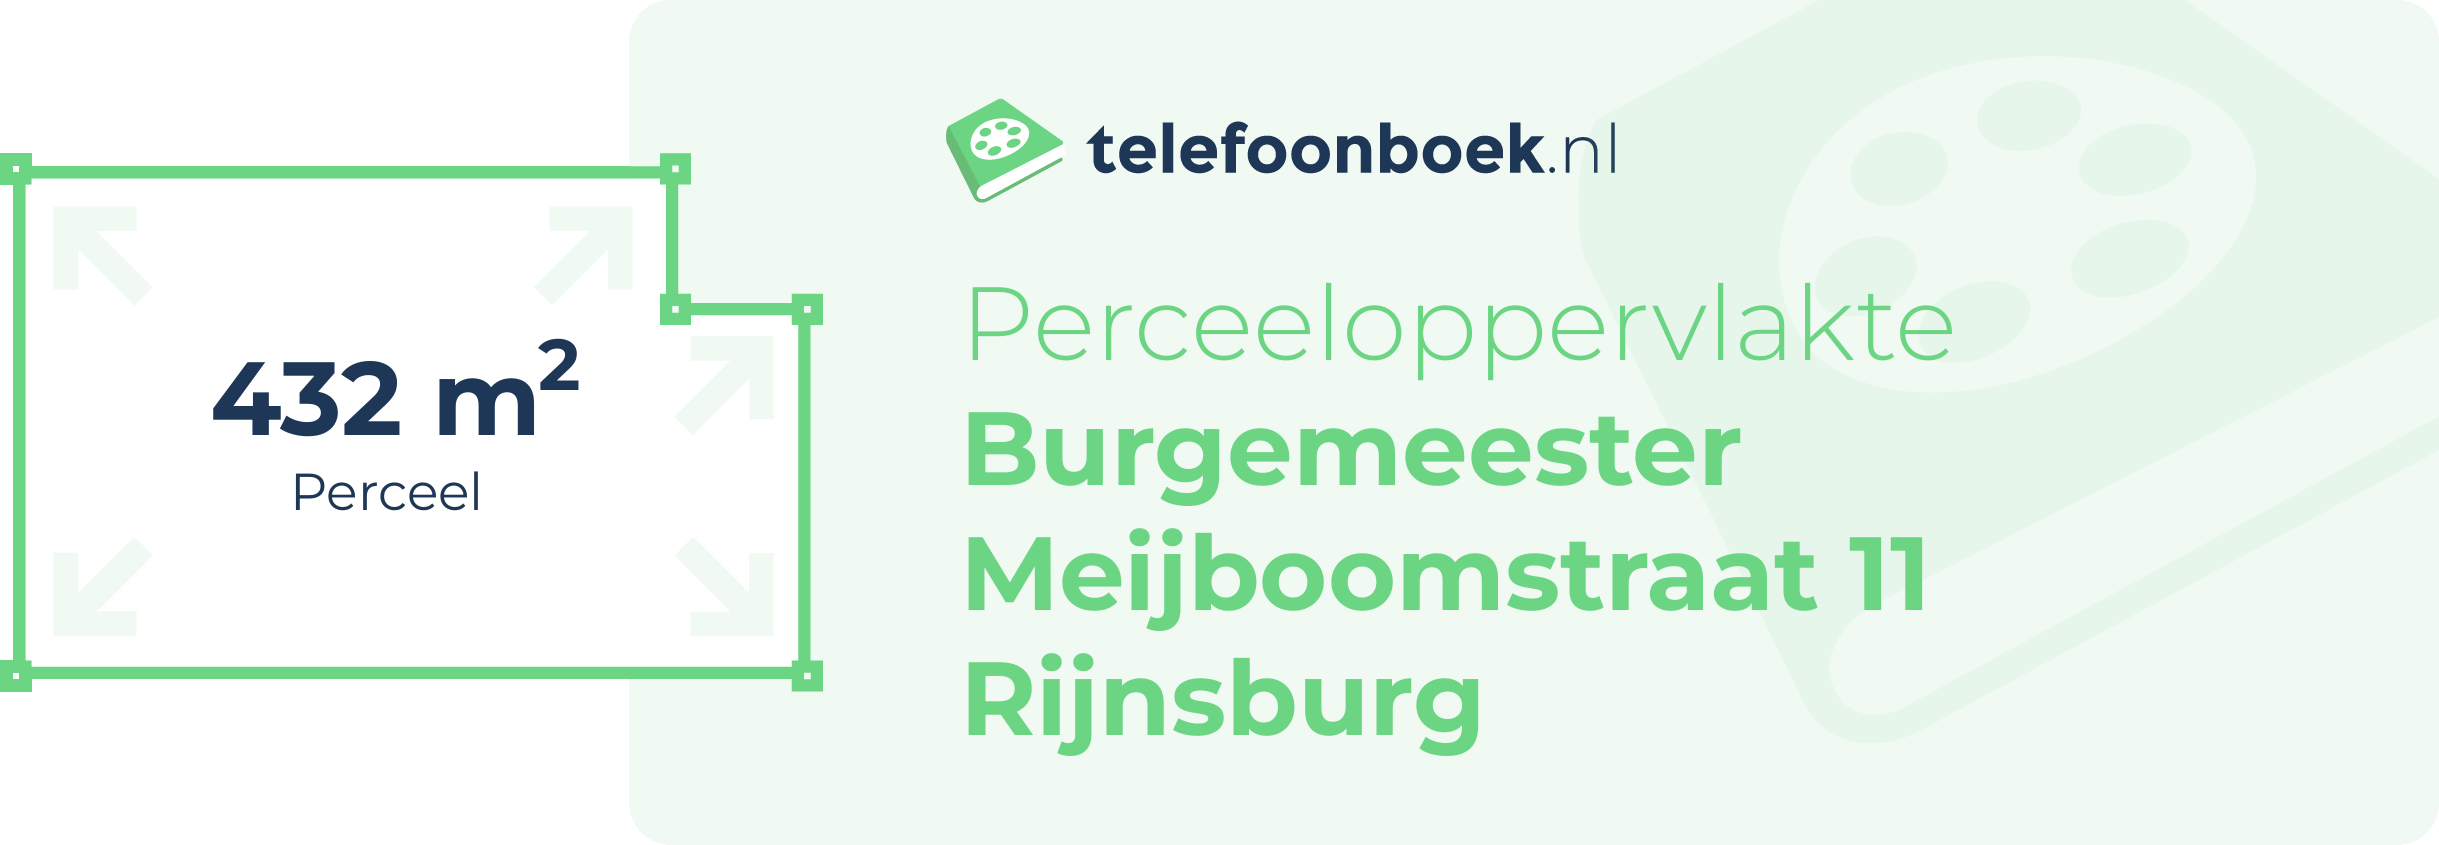 Perceeloppervlakte Burgemeester Meijboomstraat 11 Rijnsburg